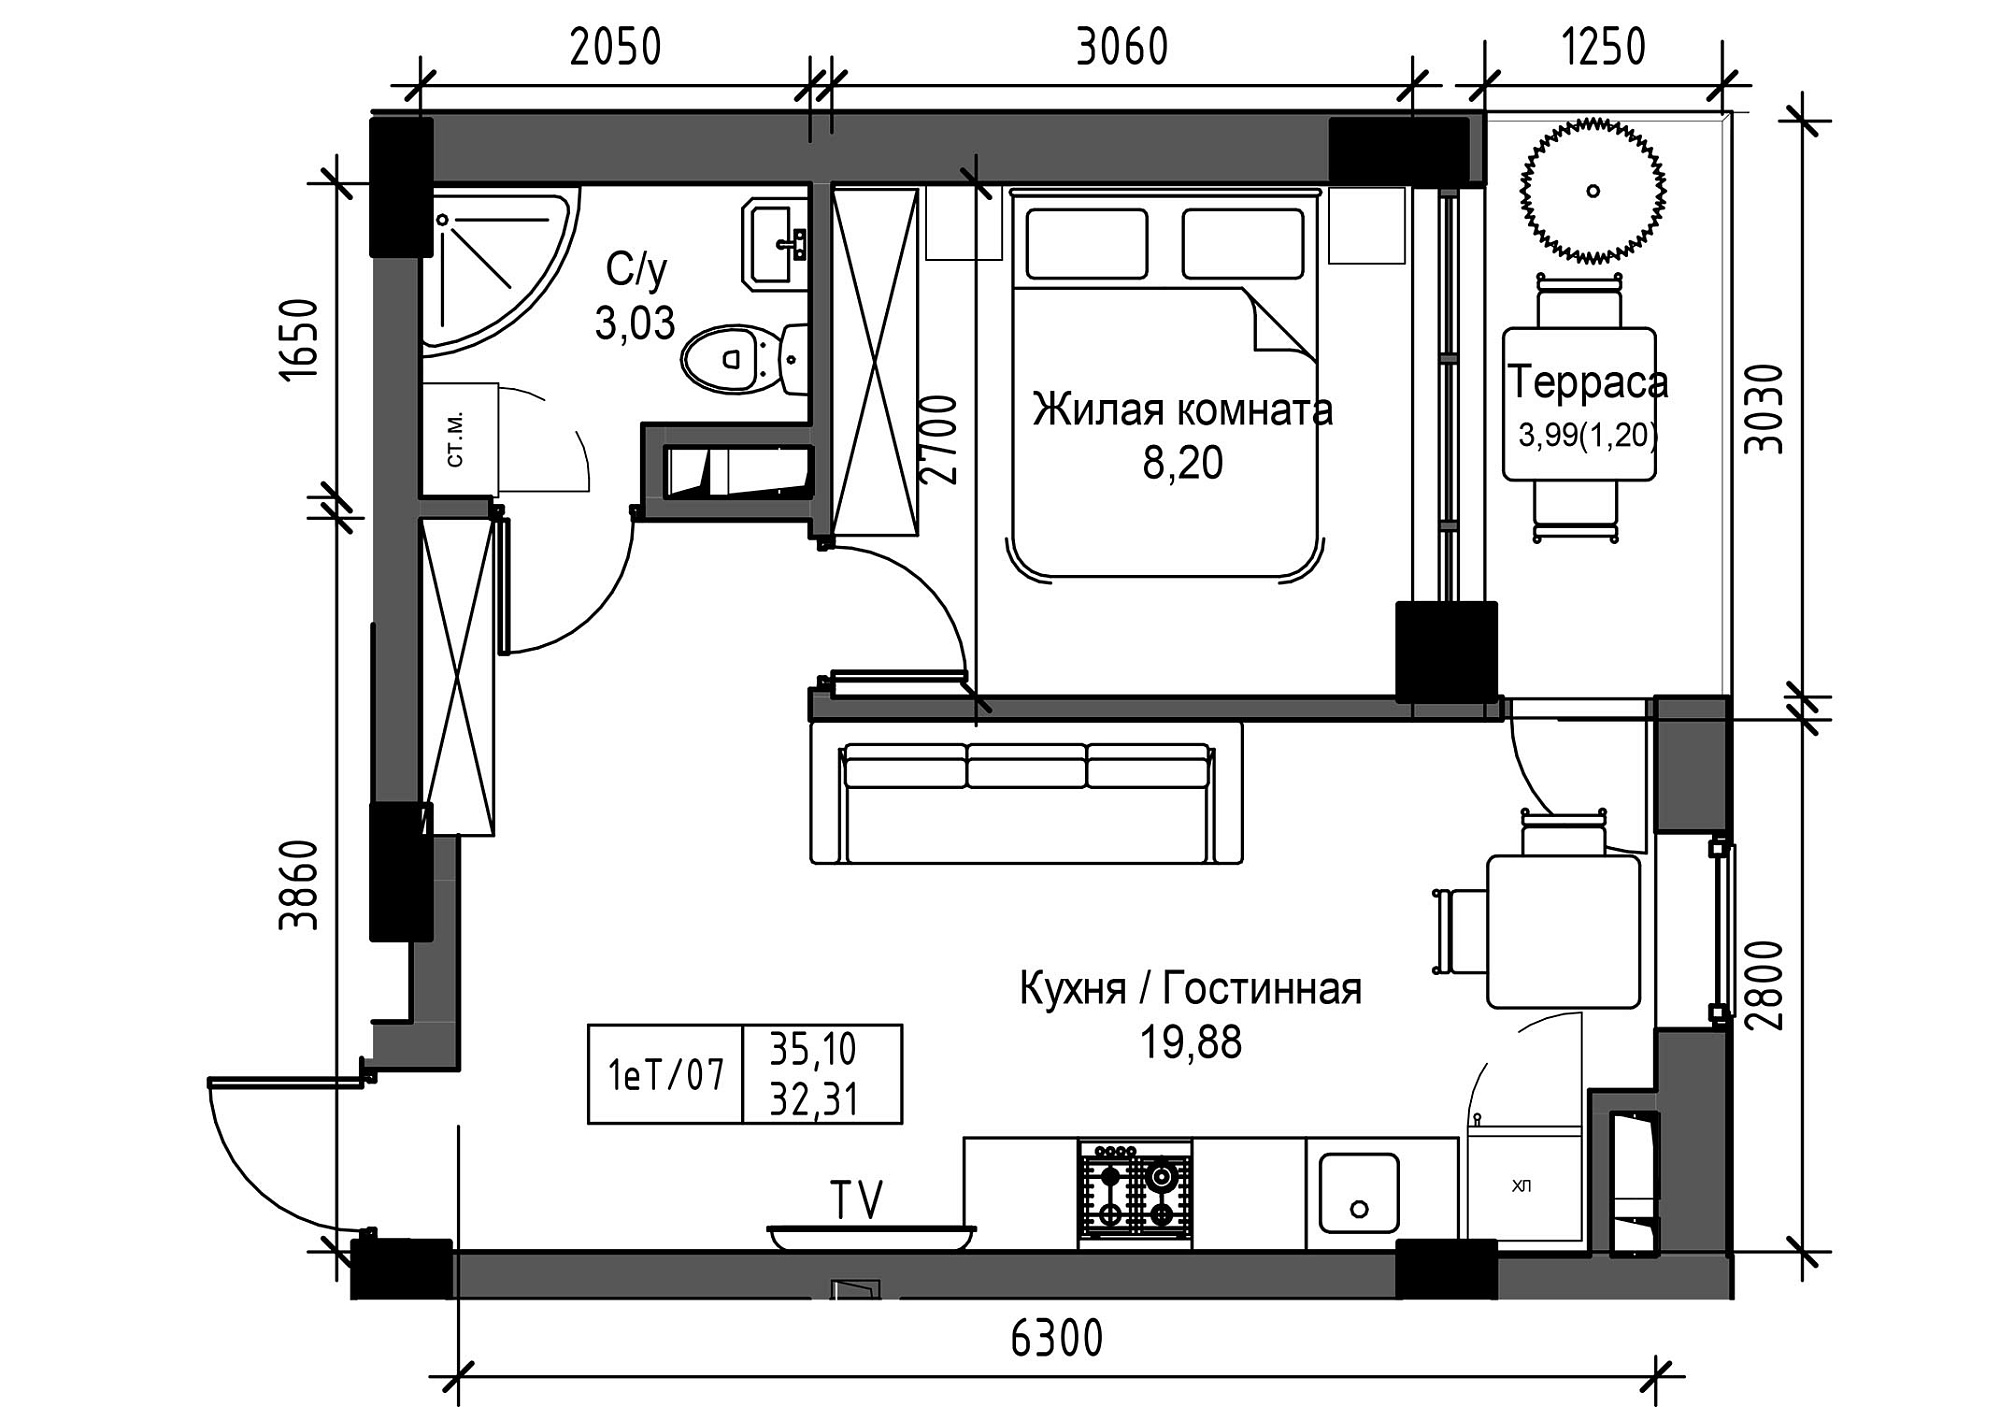 Planning 1-rm flats area 32.31m2, UM-003-03/0017.